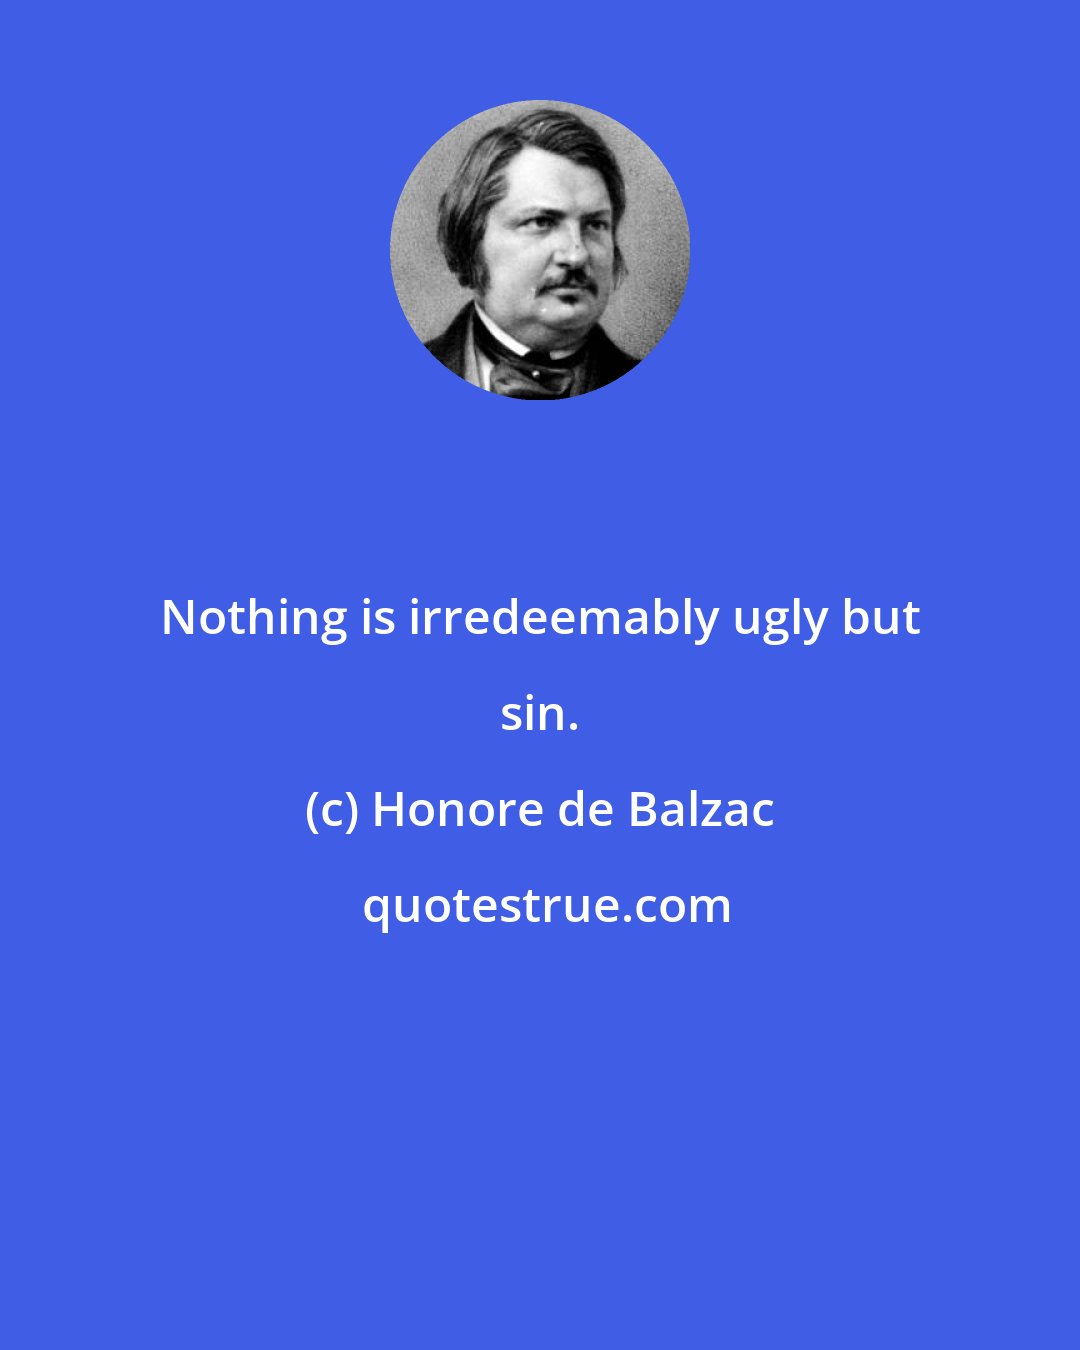 Honore de Balzac: Nothing is irredeemably ugly but sin.